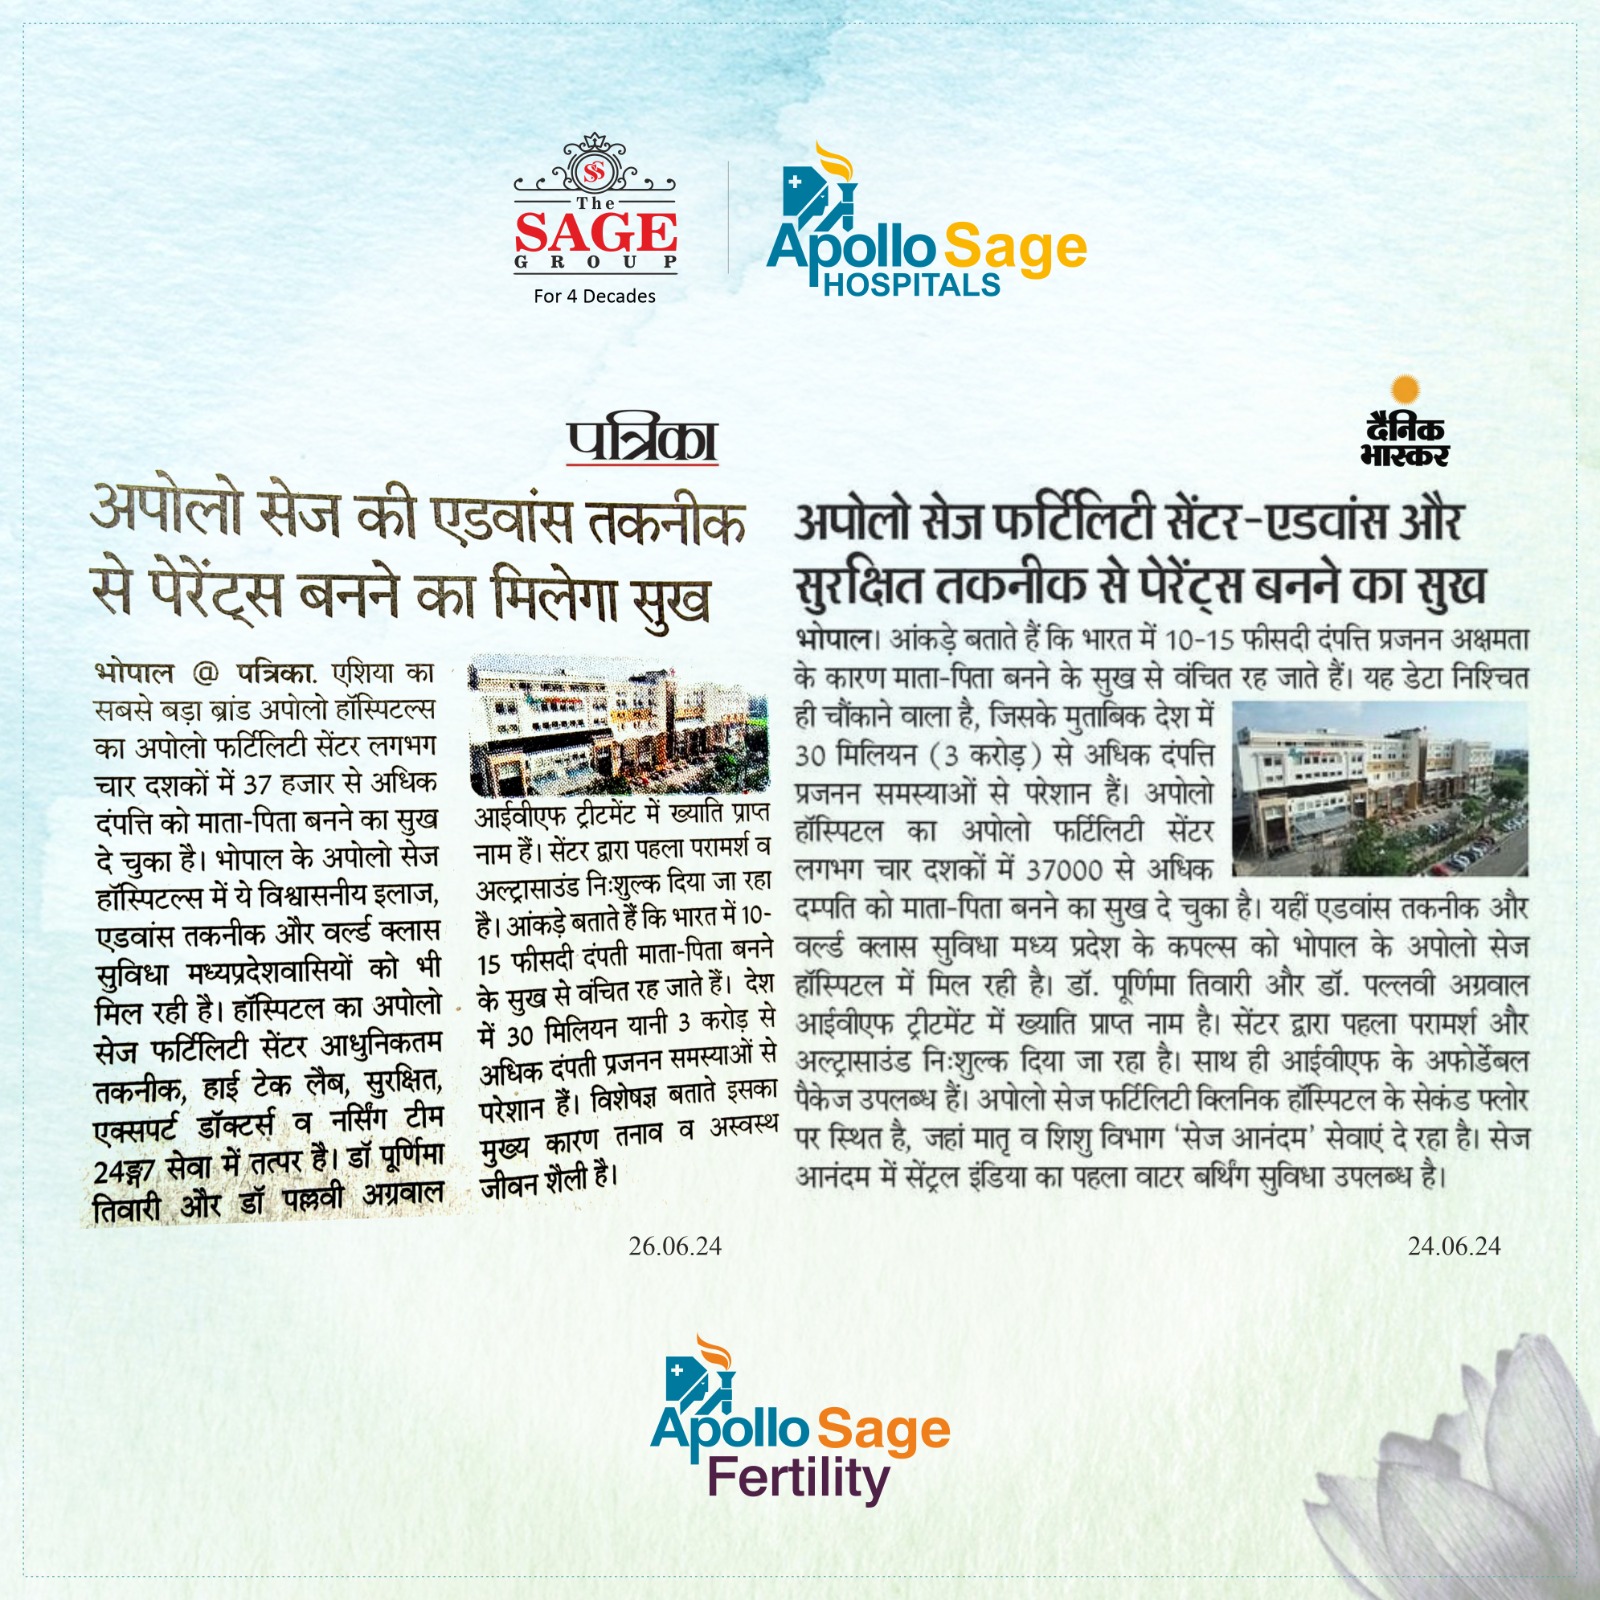 Apollo SAGE Advanced Fertility Center in Bhopal